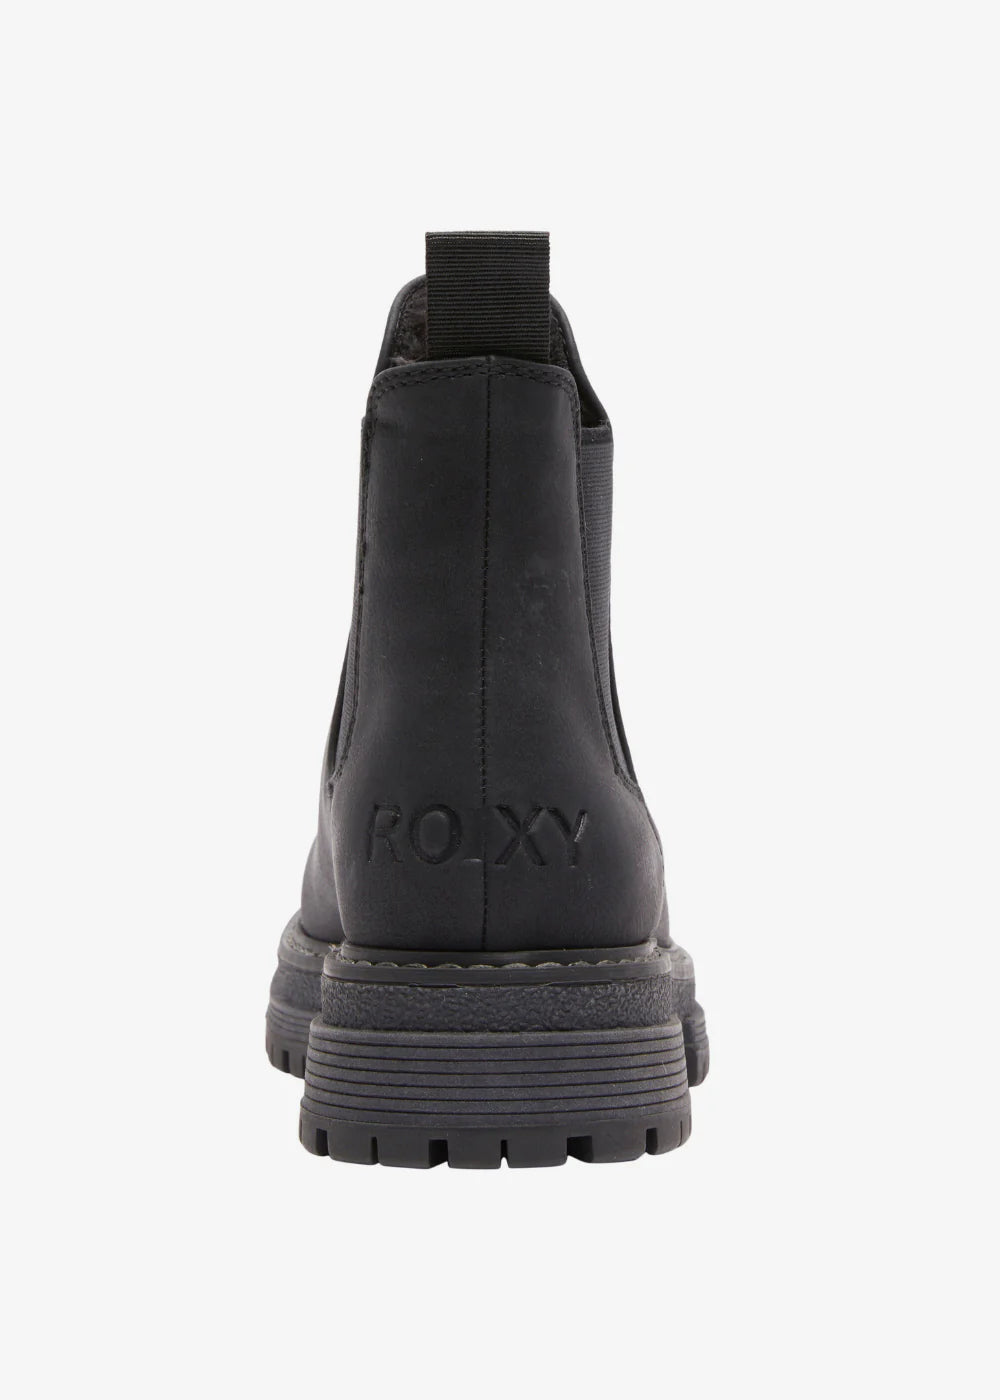 Roxy Women's Lorena II Boots Black